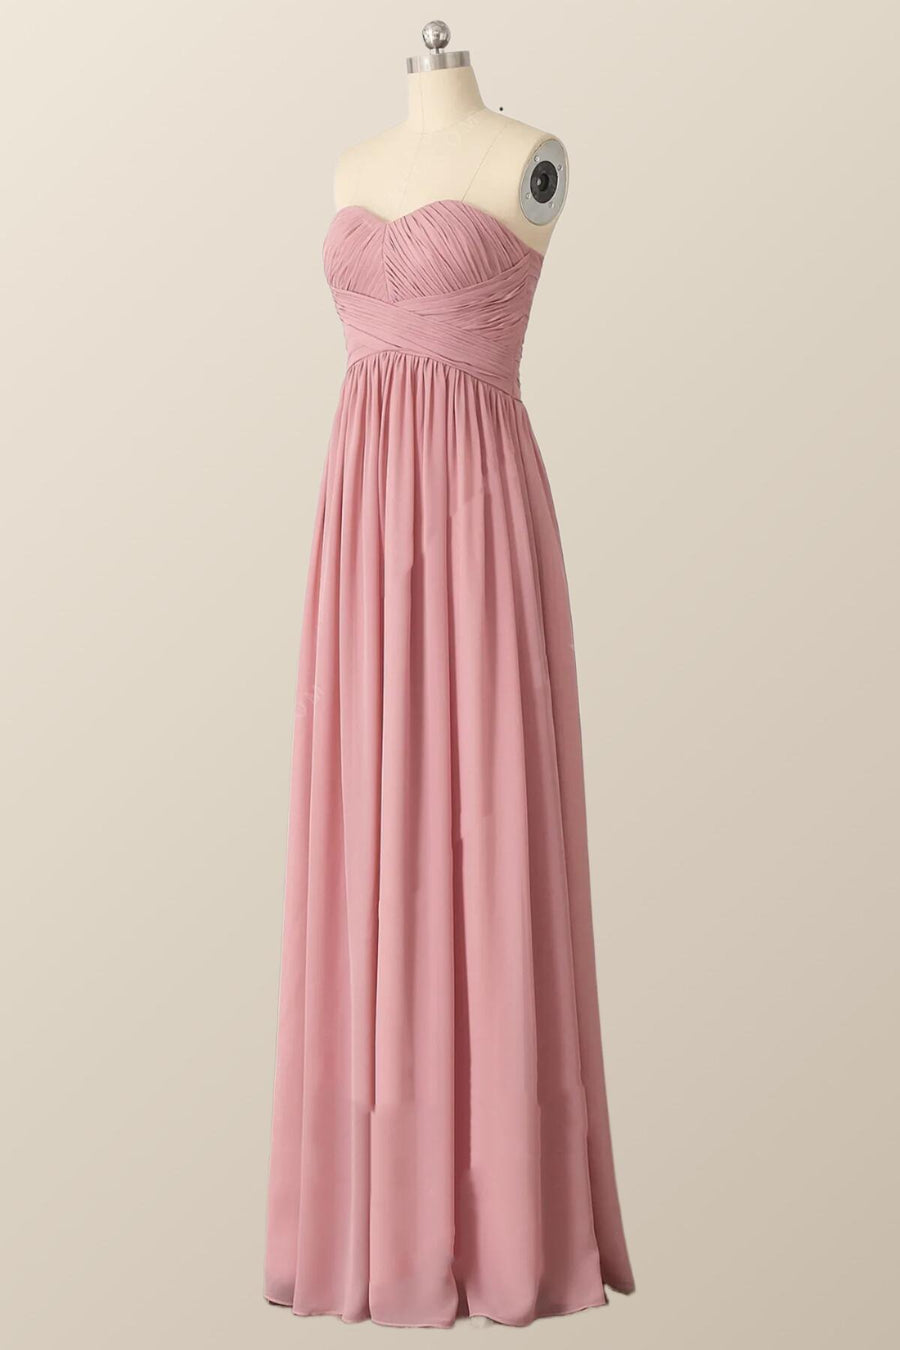 Sweetheart Blush Pink Chiffon Long Bridesmaid Dress